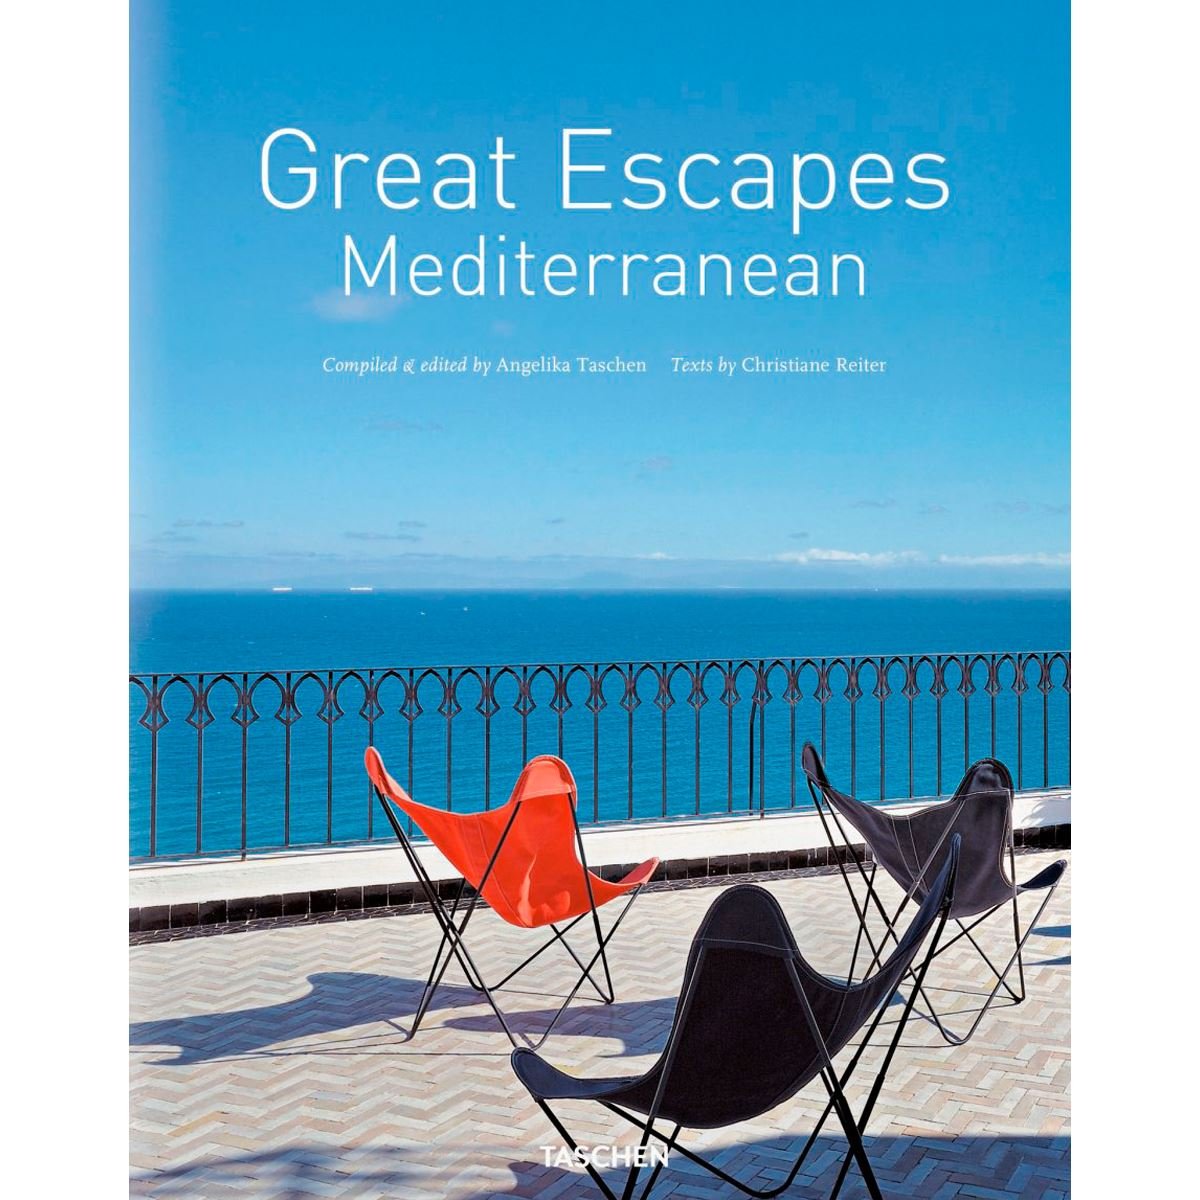 Great escapes Mediterranean